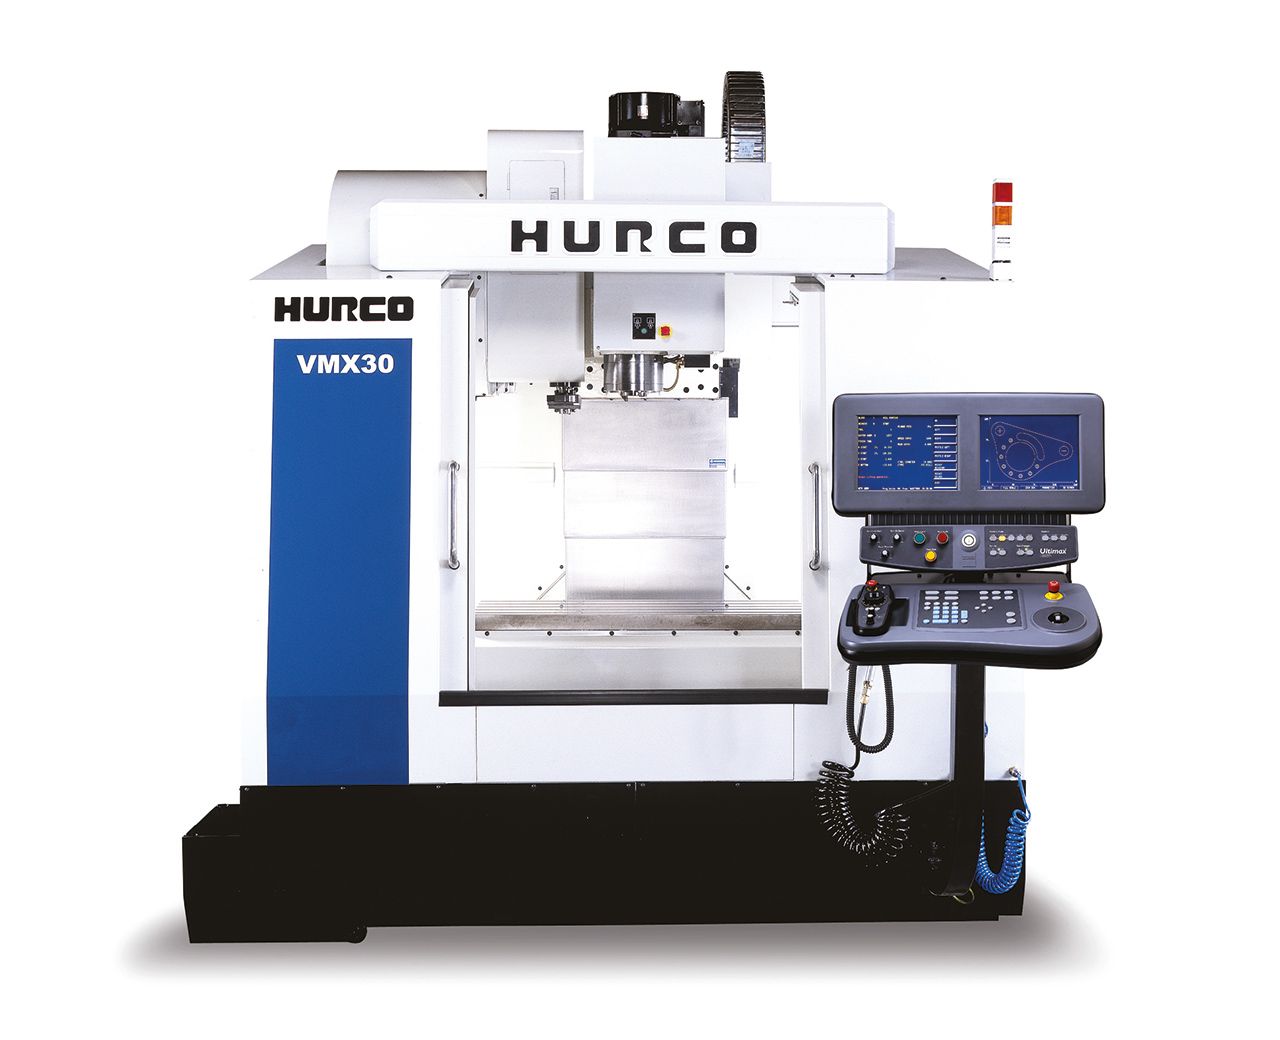 HURCO VMX30